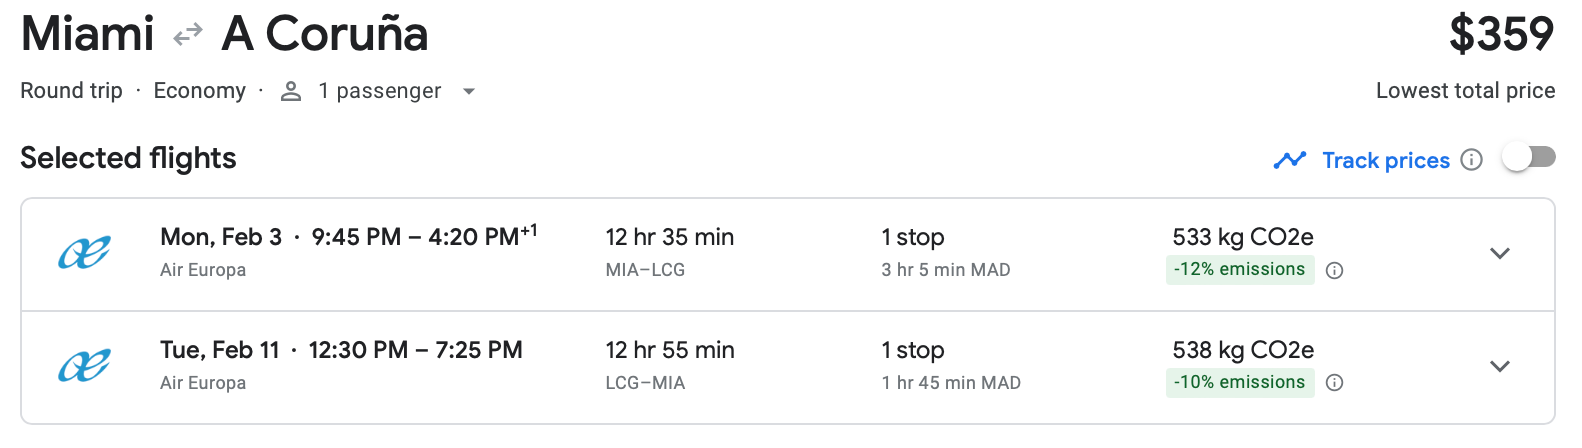 Google Flights estimate for roundtrip flight from Miami to A Coruña